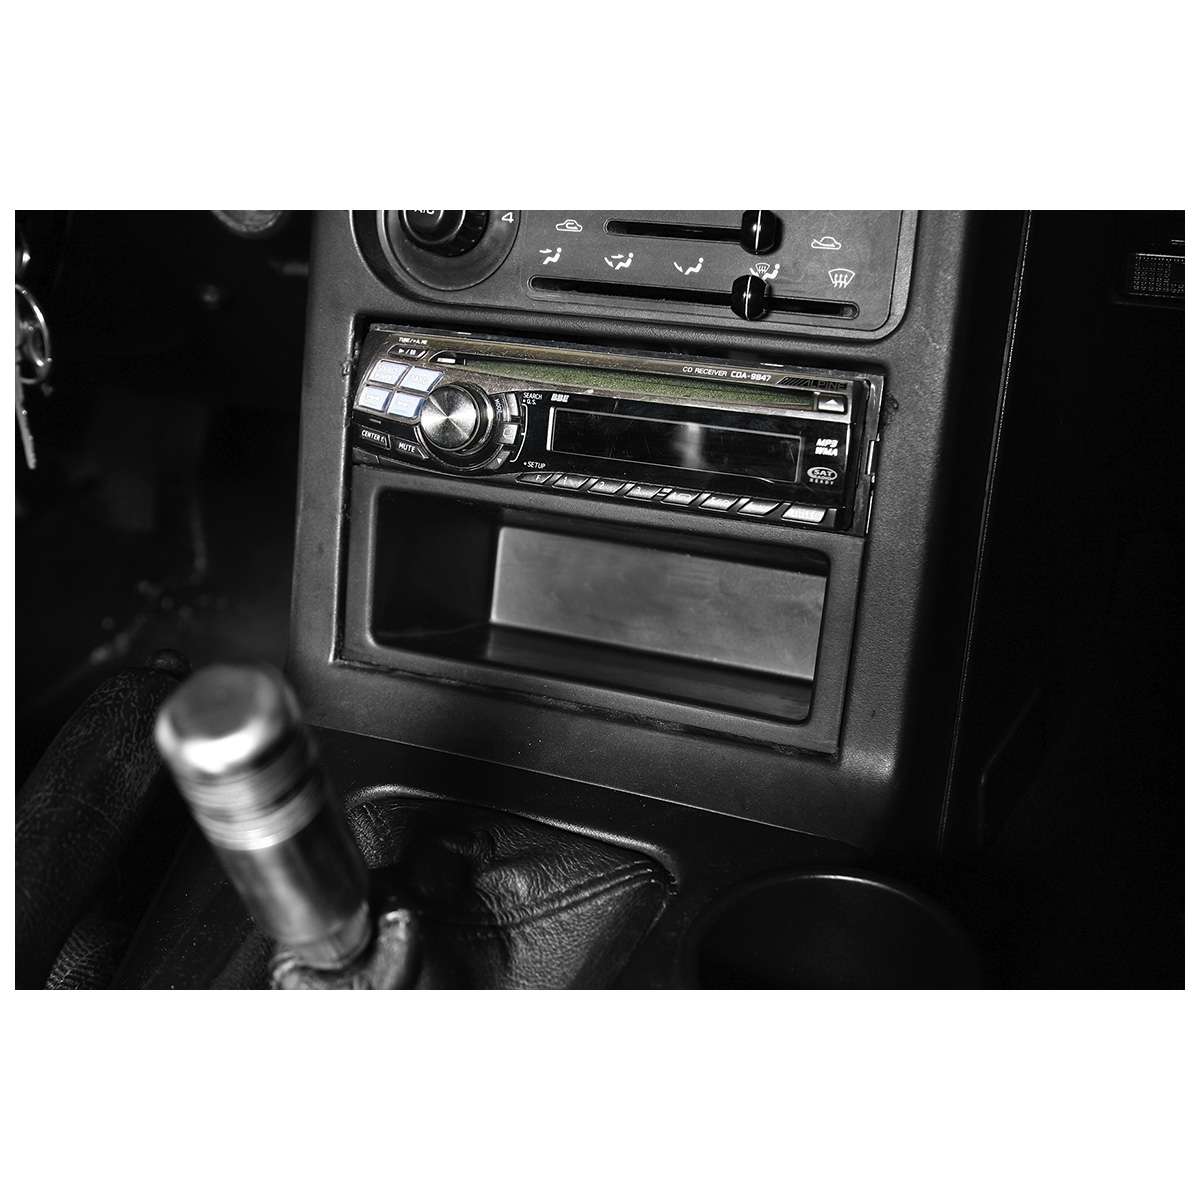 Mazda MX5 Mk1 Radio cubby 19891997 DIN radios NEW part no